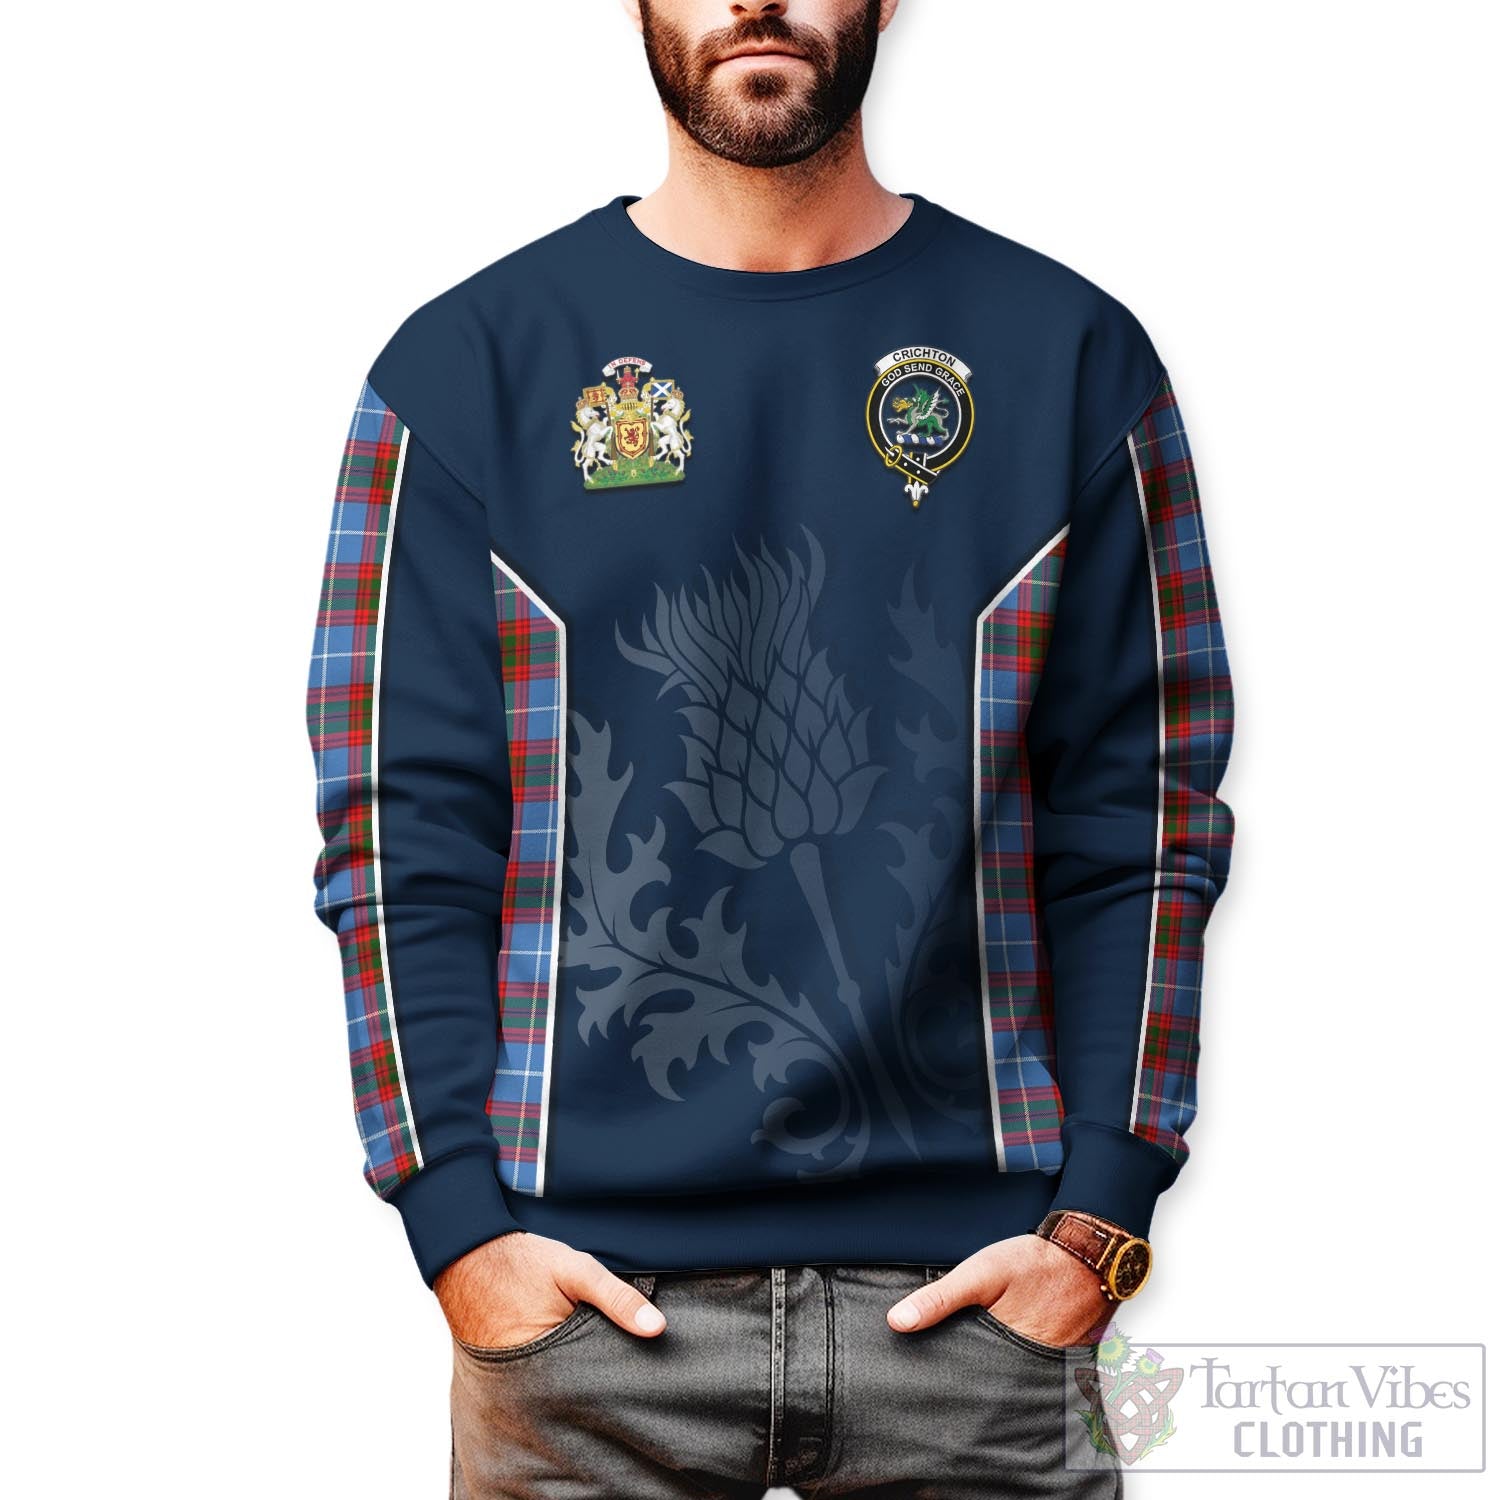 Tartan Vibes Clothing Crichton Tartan Sweatshirt with Family Crest and Scottish Thistle Vibes Sport Style